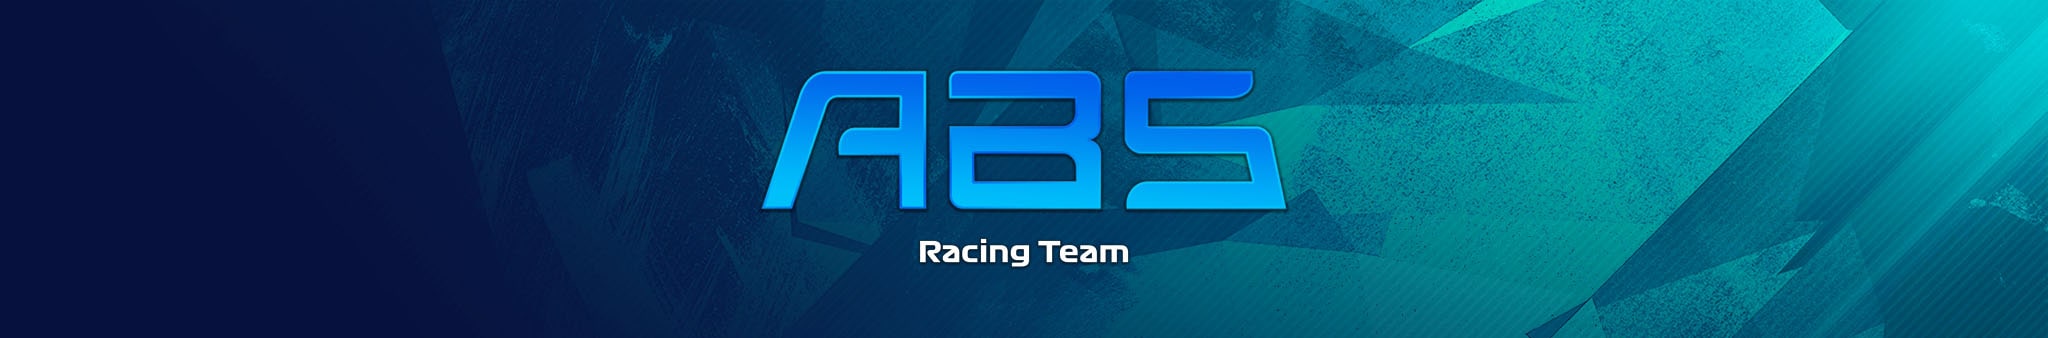 ABS Racing